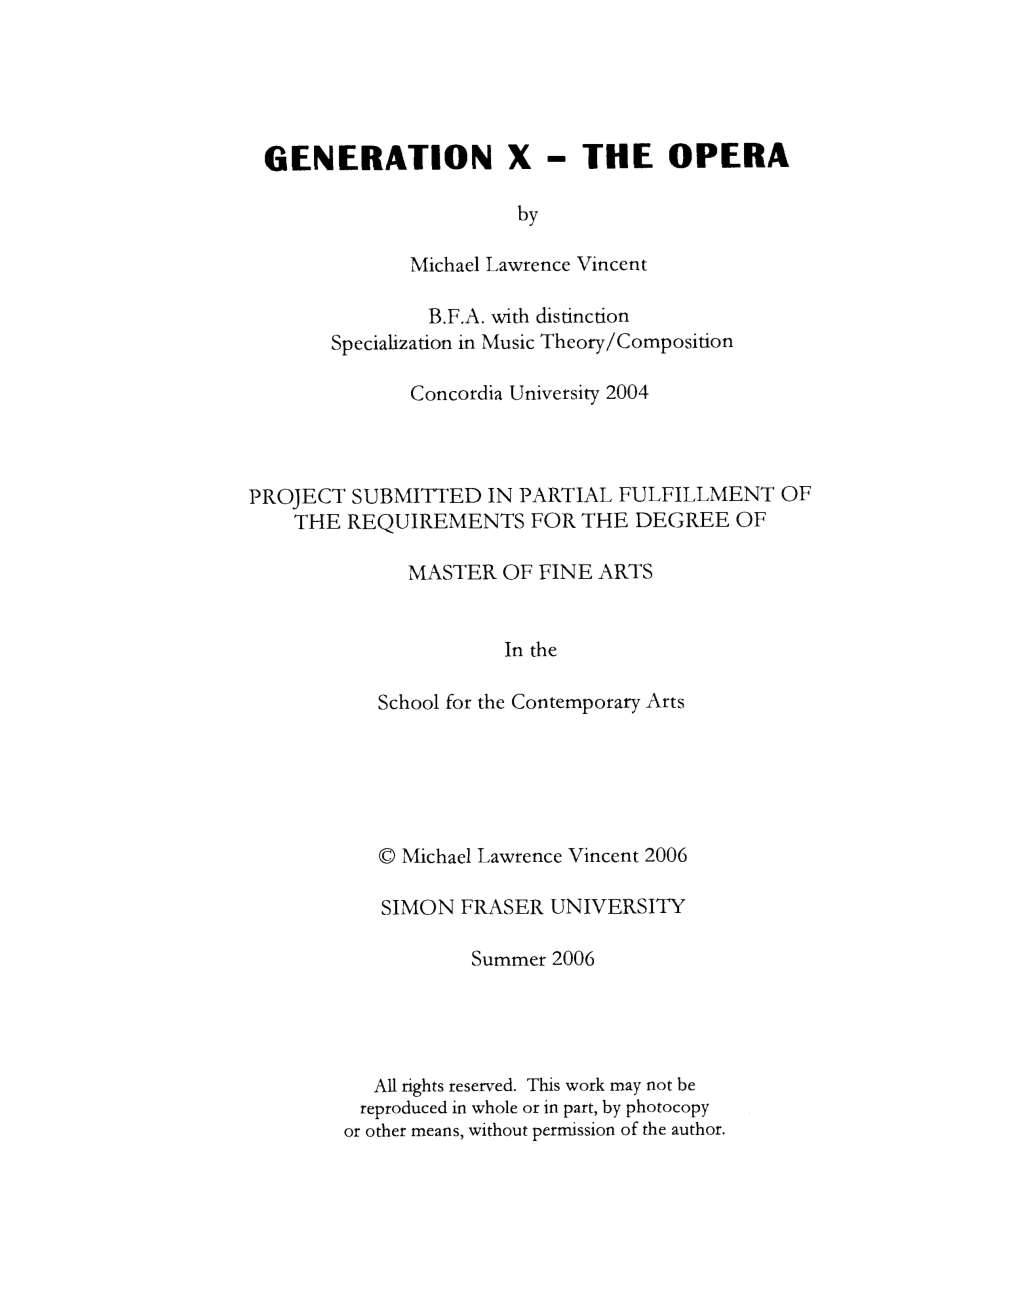 Generation X - the Opera